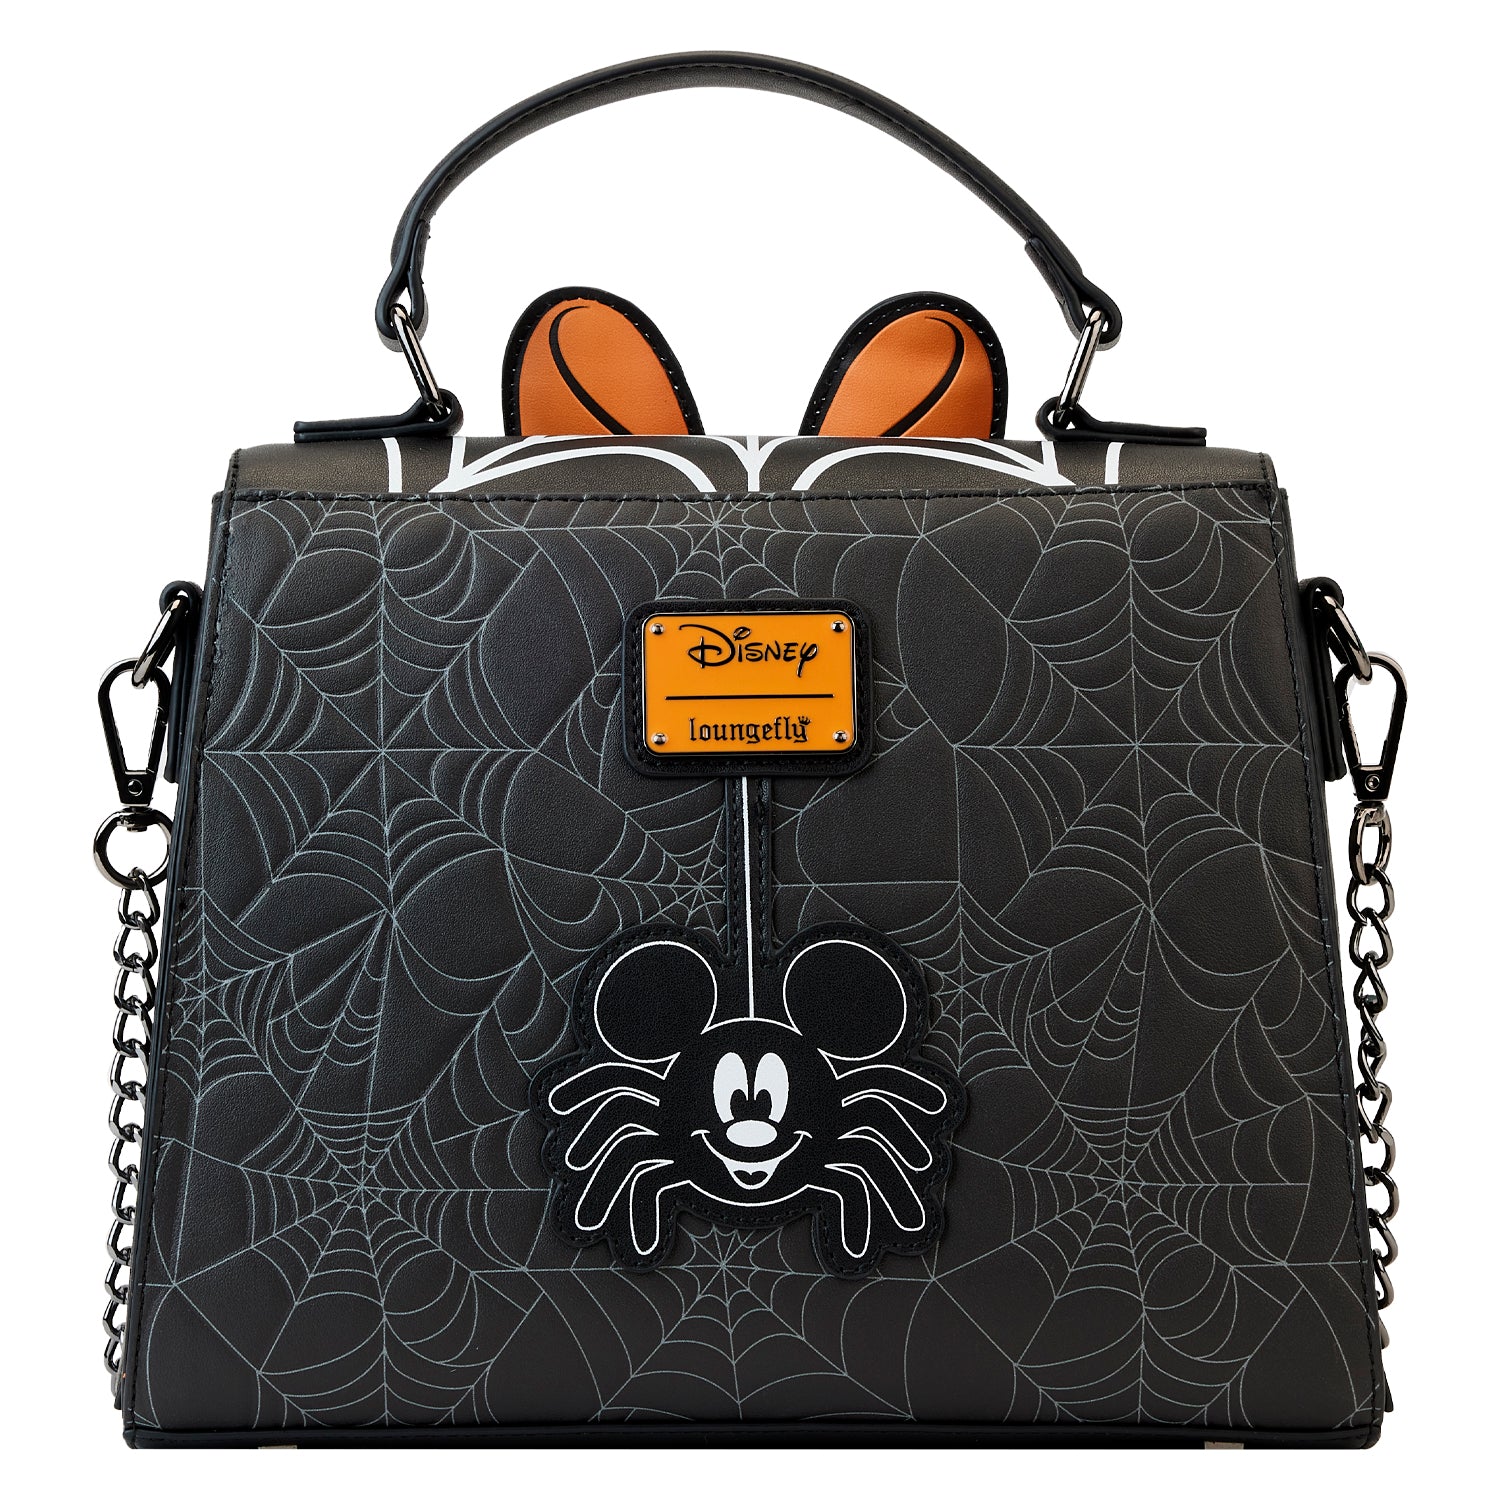 Loungefly x Disney Minnie Mouse Spiderweb Crossbody Bag